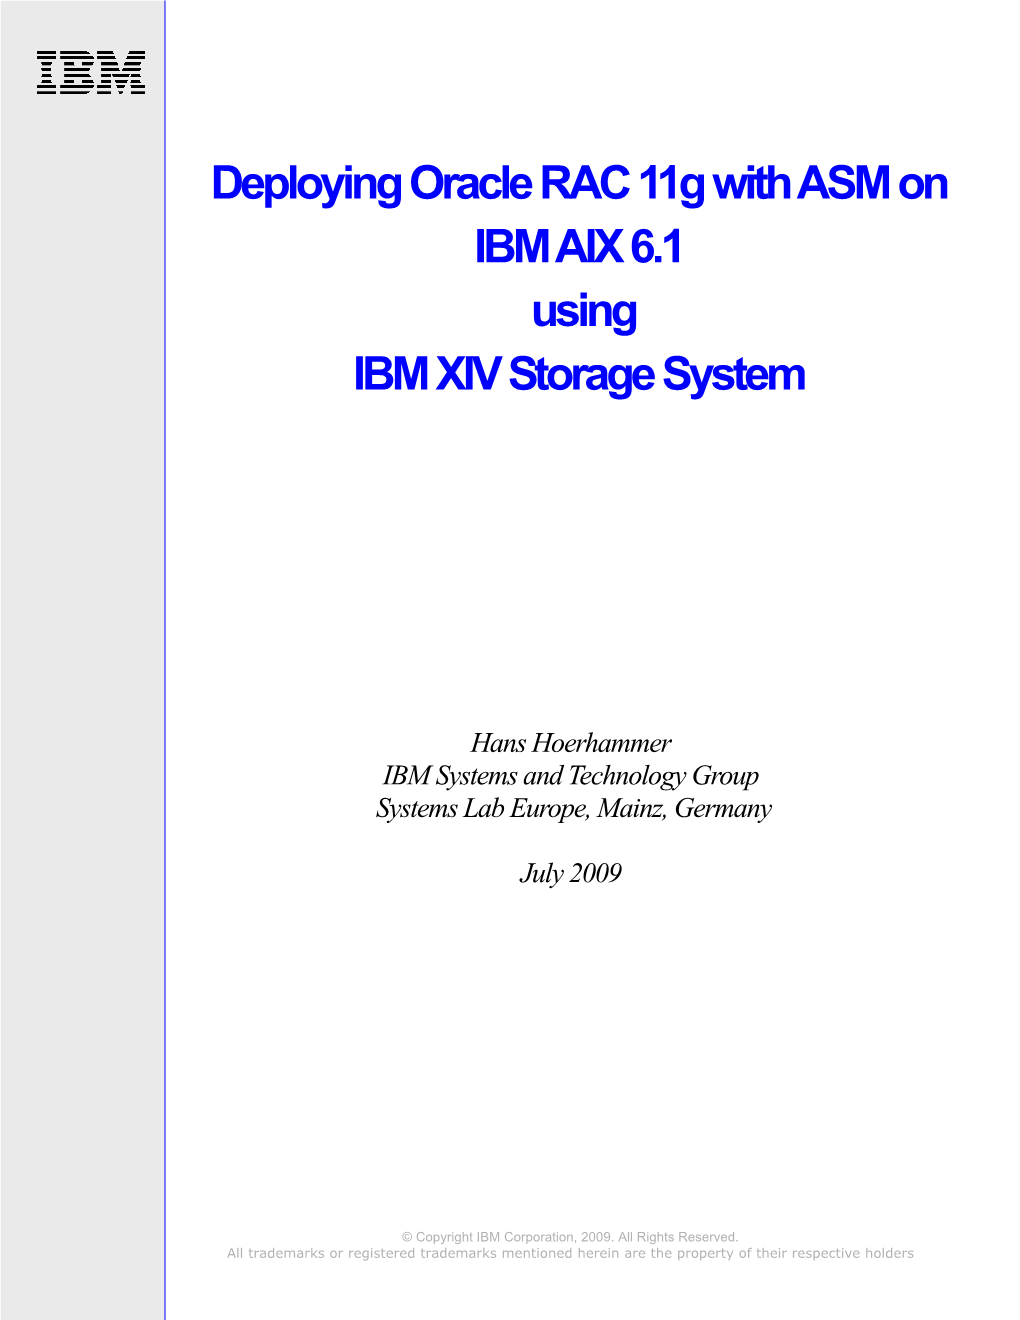 Deploying Oracle RAC 11G with ASM on IBM AIX 6.1 Using IBM XIV Storage System